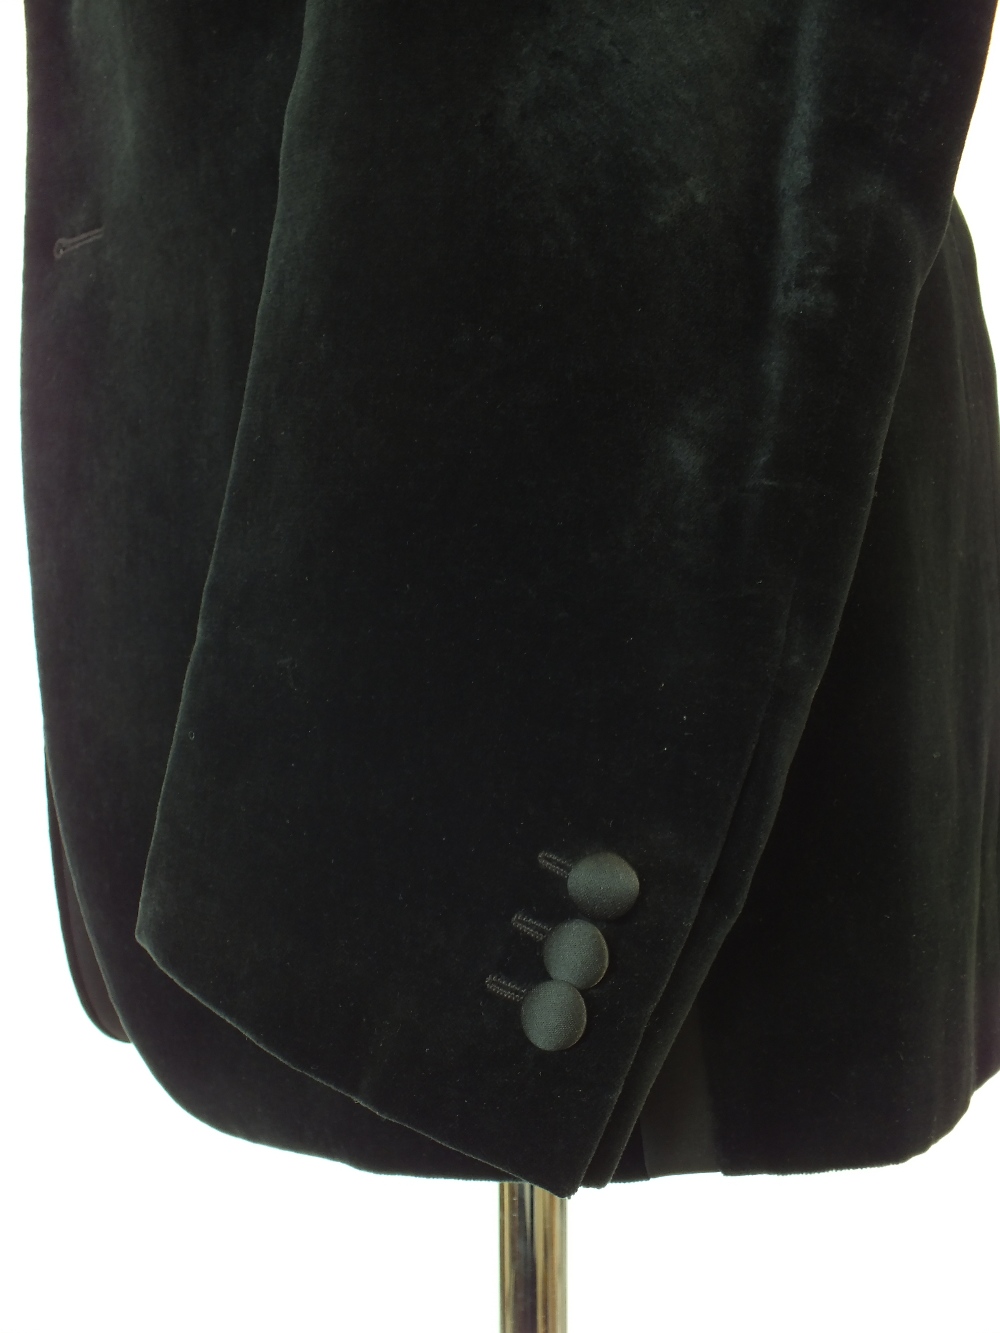 A Pal Zileri Ceromonia dinner suit, black, velvet, satin lower lapel, single vent, Italian size 52R, - Image 5 of 6